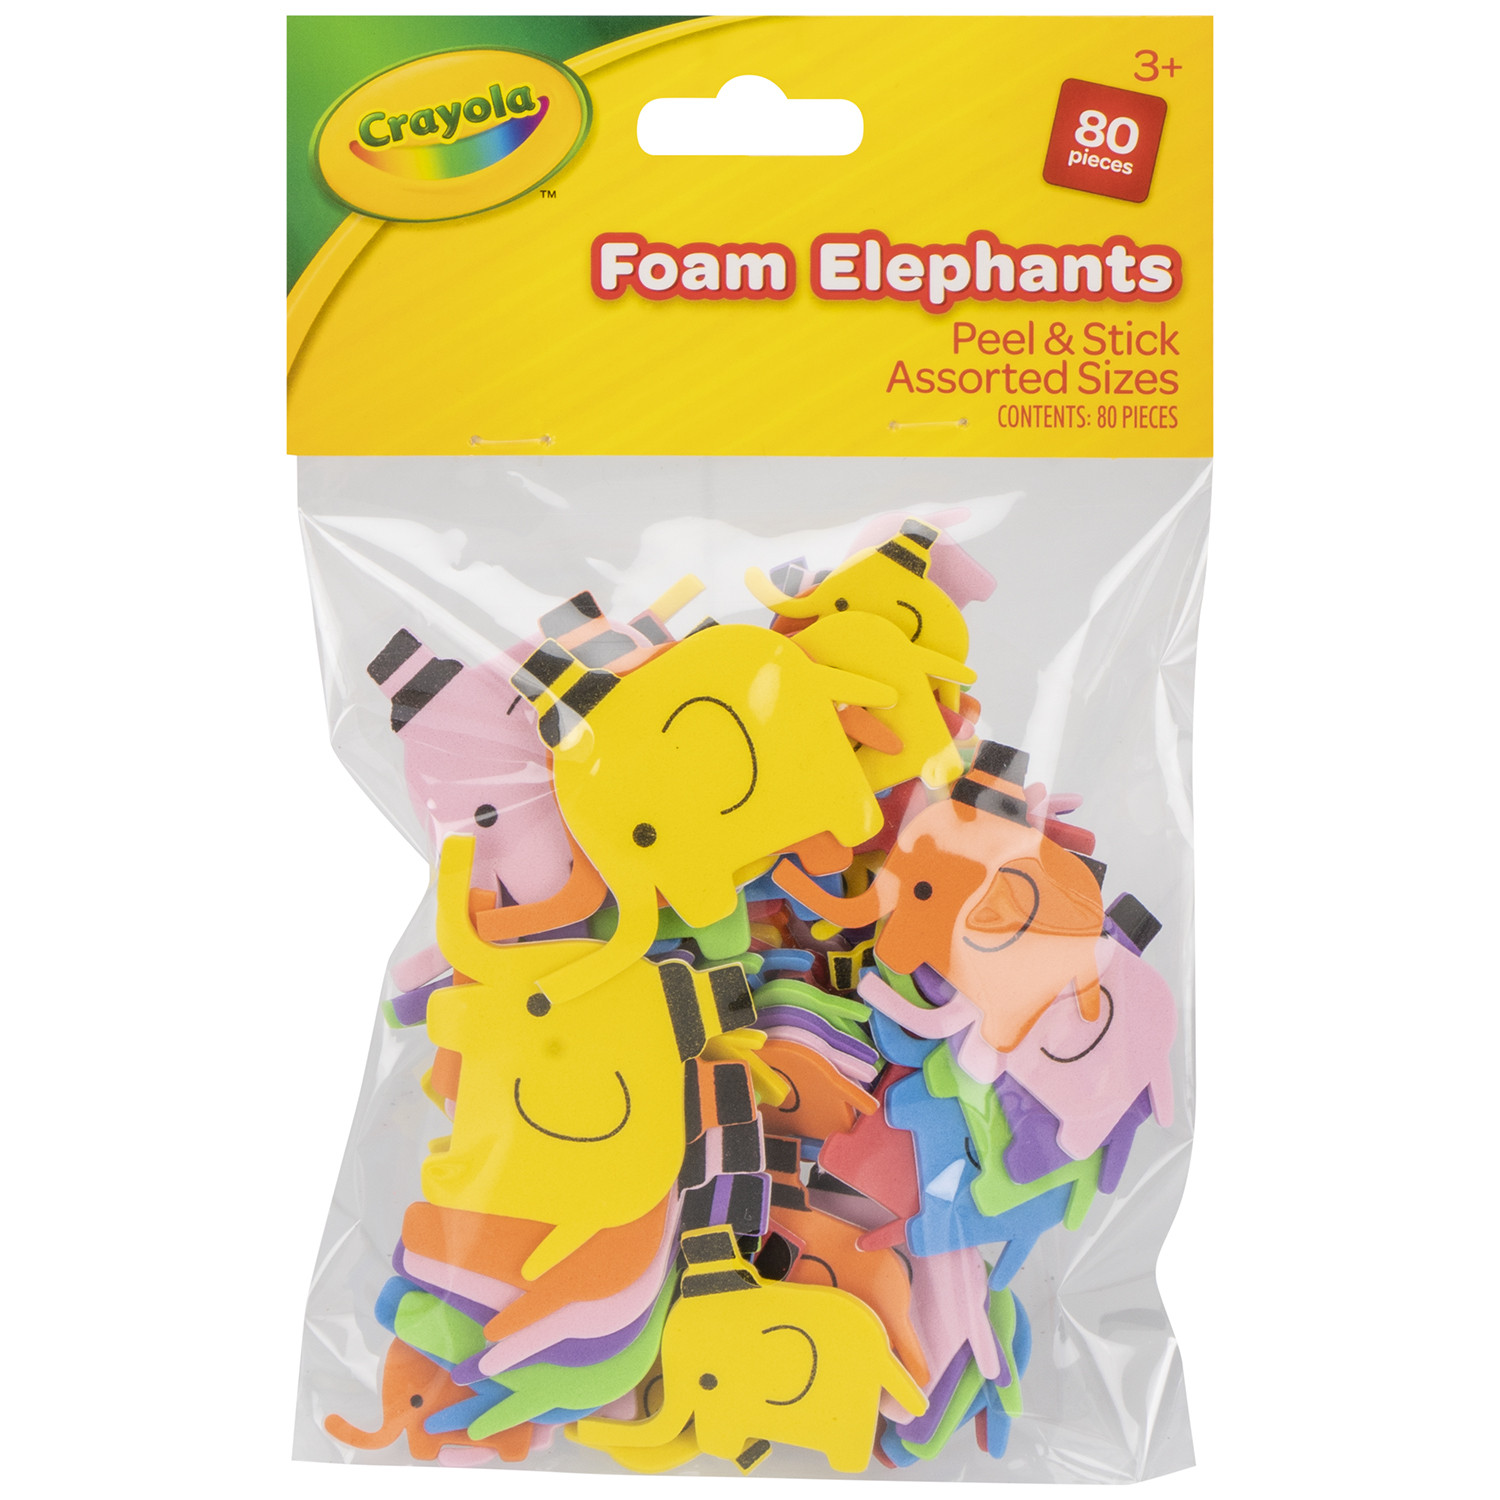 Foam Elephants Image